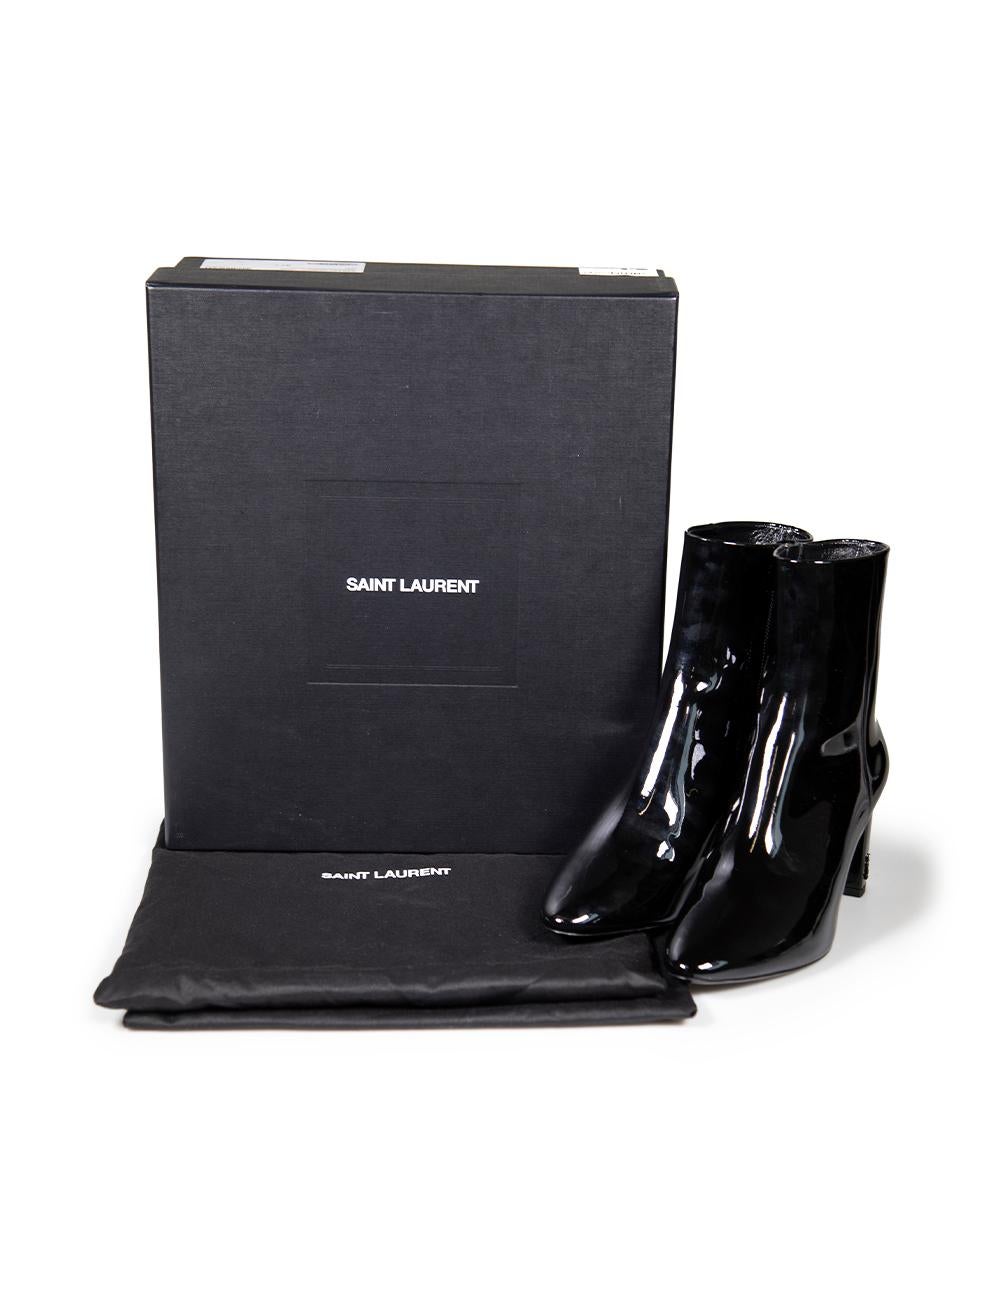 Saint Laurent Black Patent Heeled Ankle Boots Size IT 37.5 For Sale 1